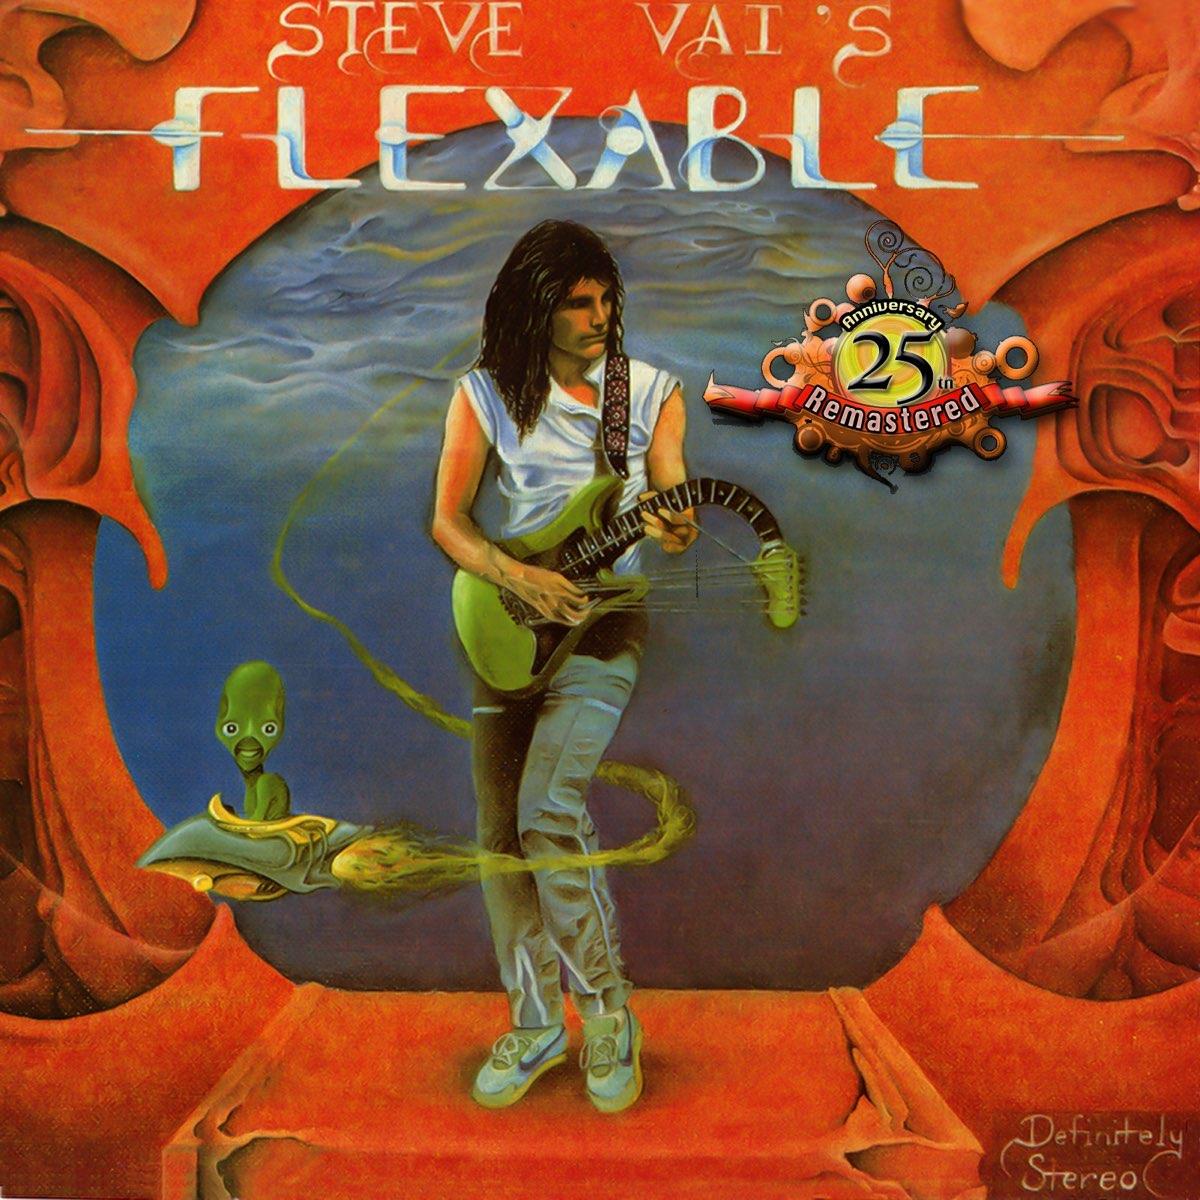 Flex-Able 25th anniversary | Steve Vai | stevevai.it